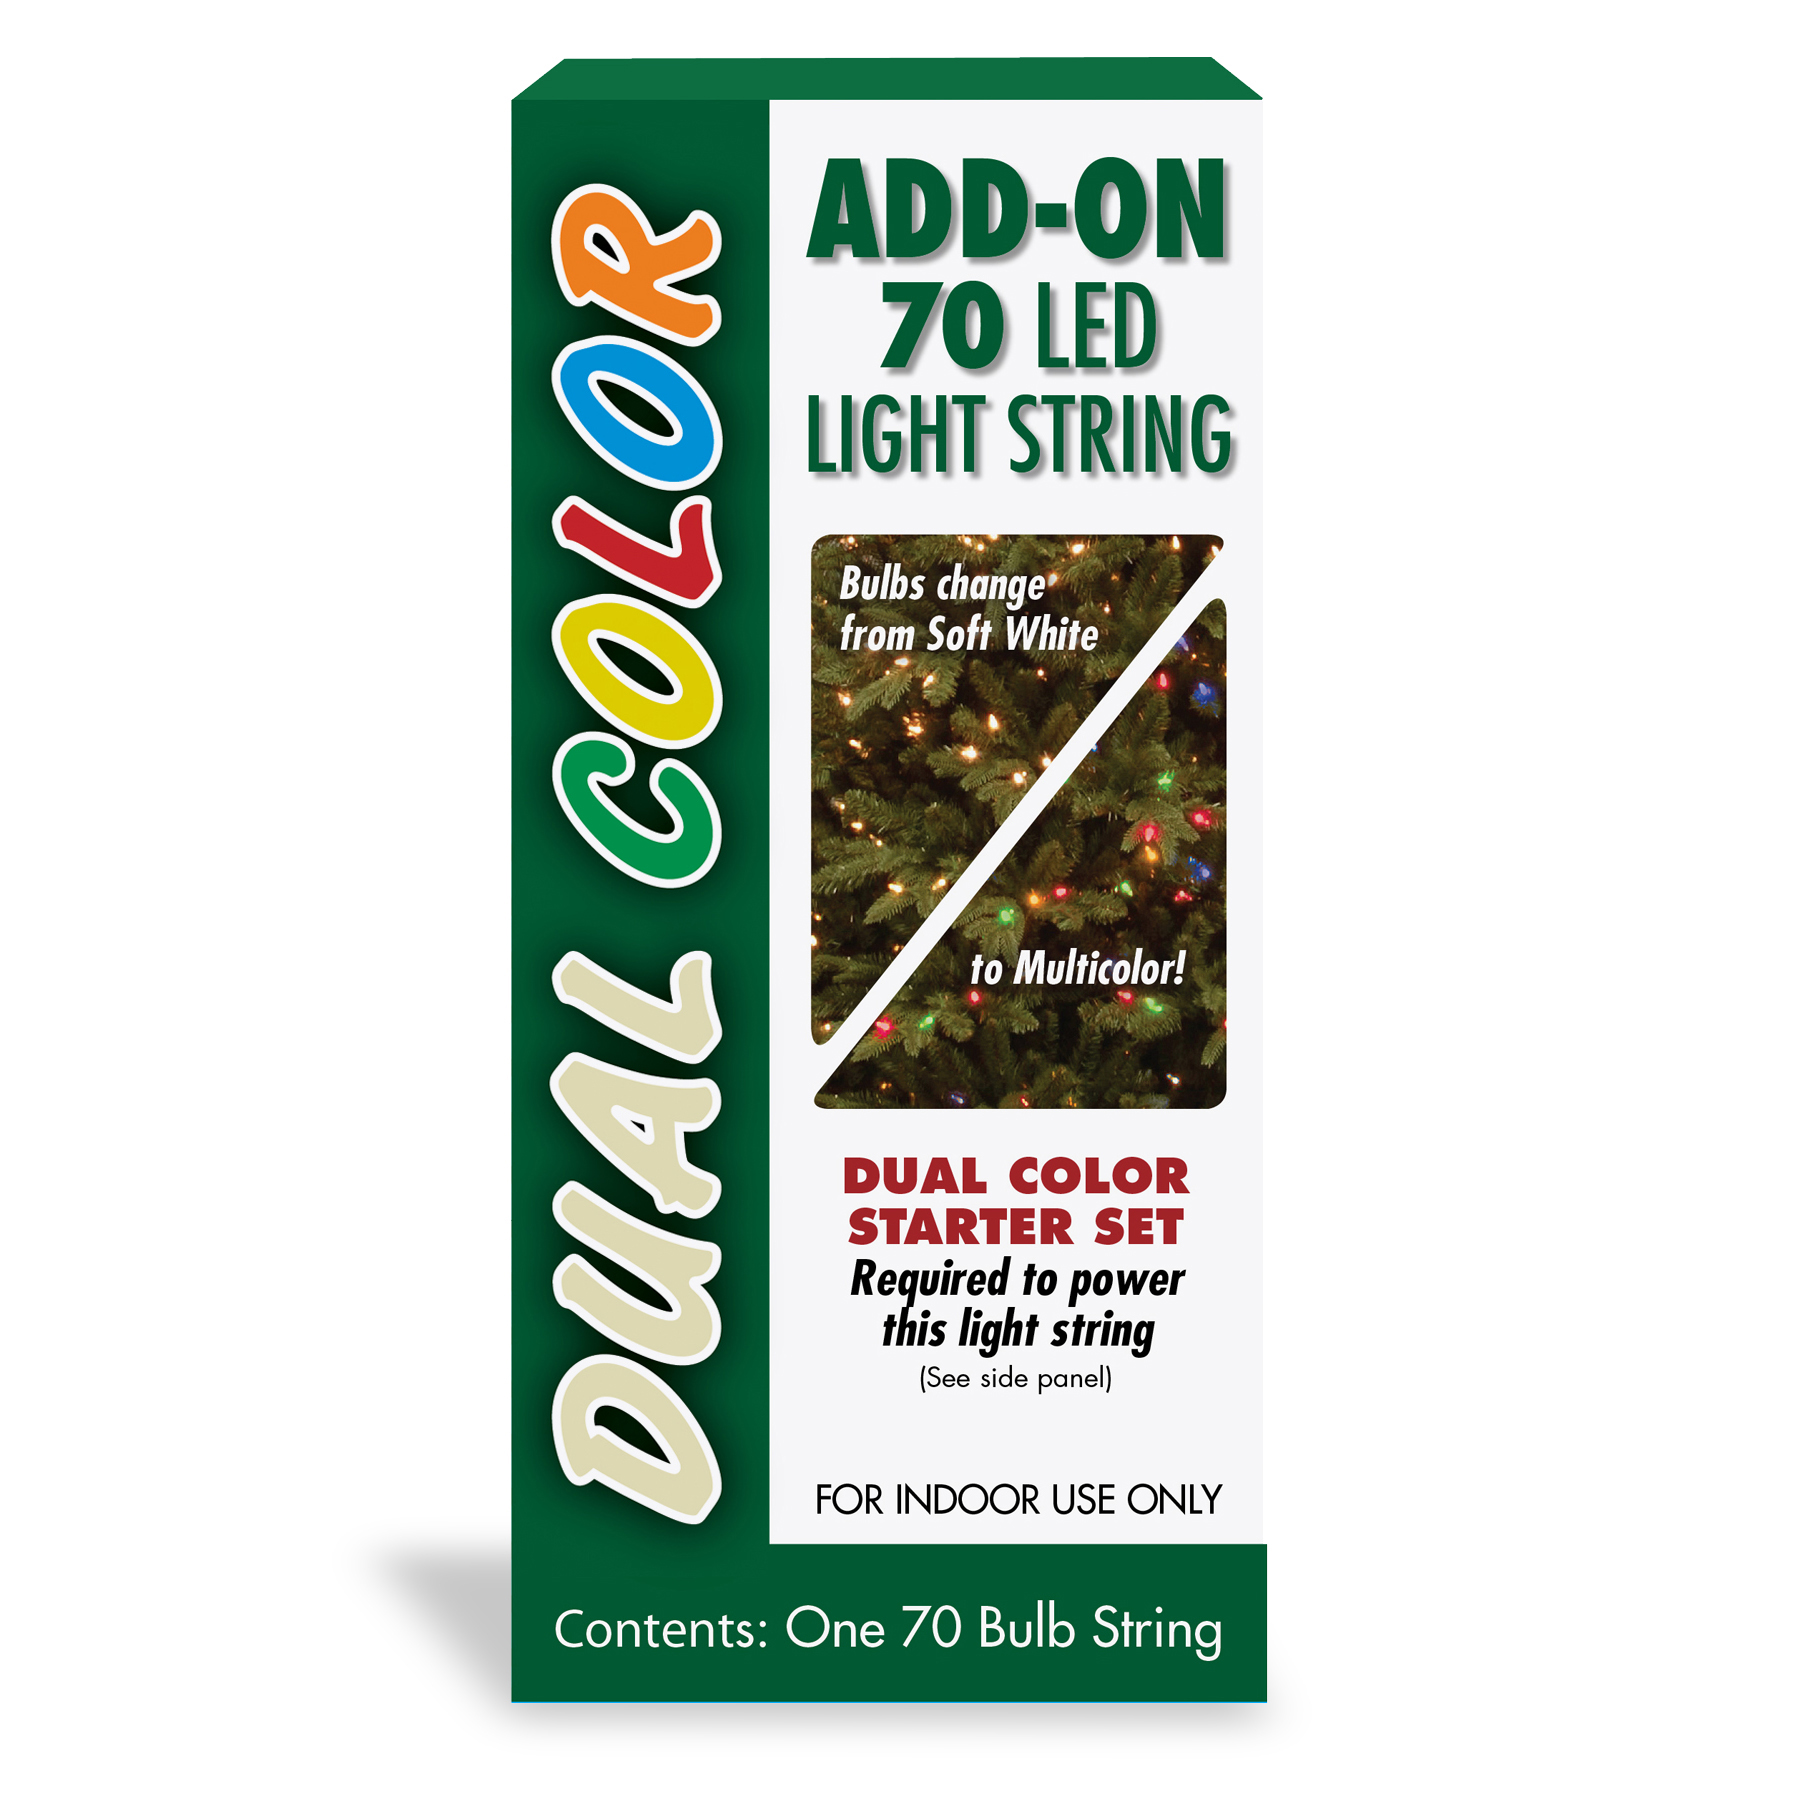 National Tree Company 70 Bulb Dual Color LED Light String ADD ON SET